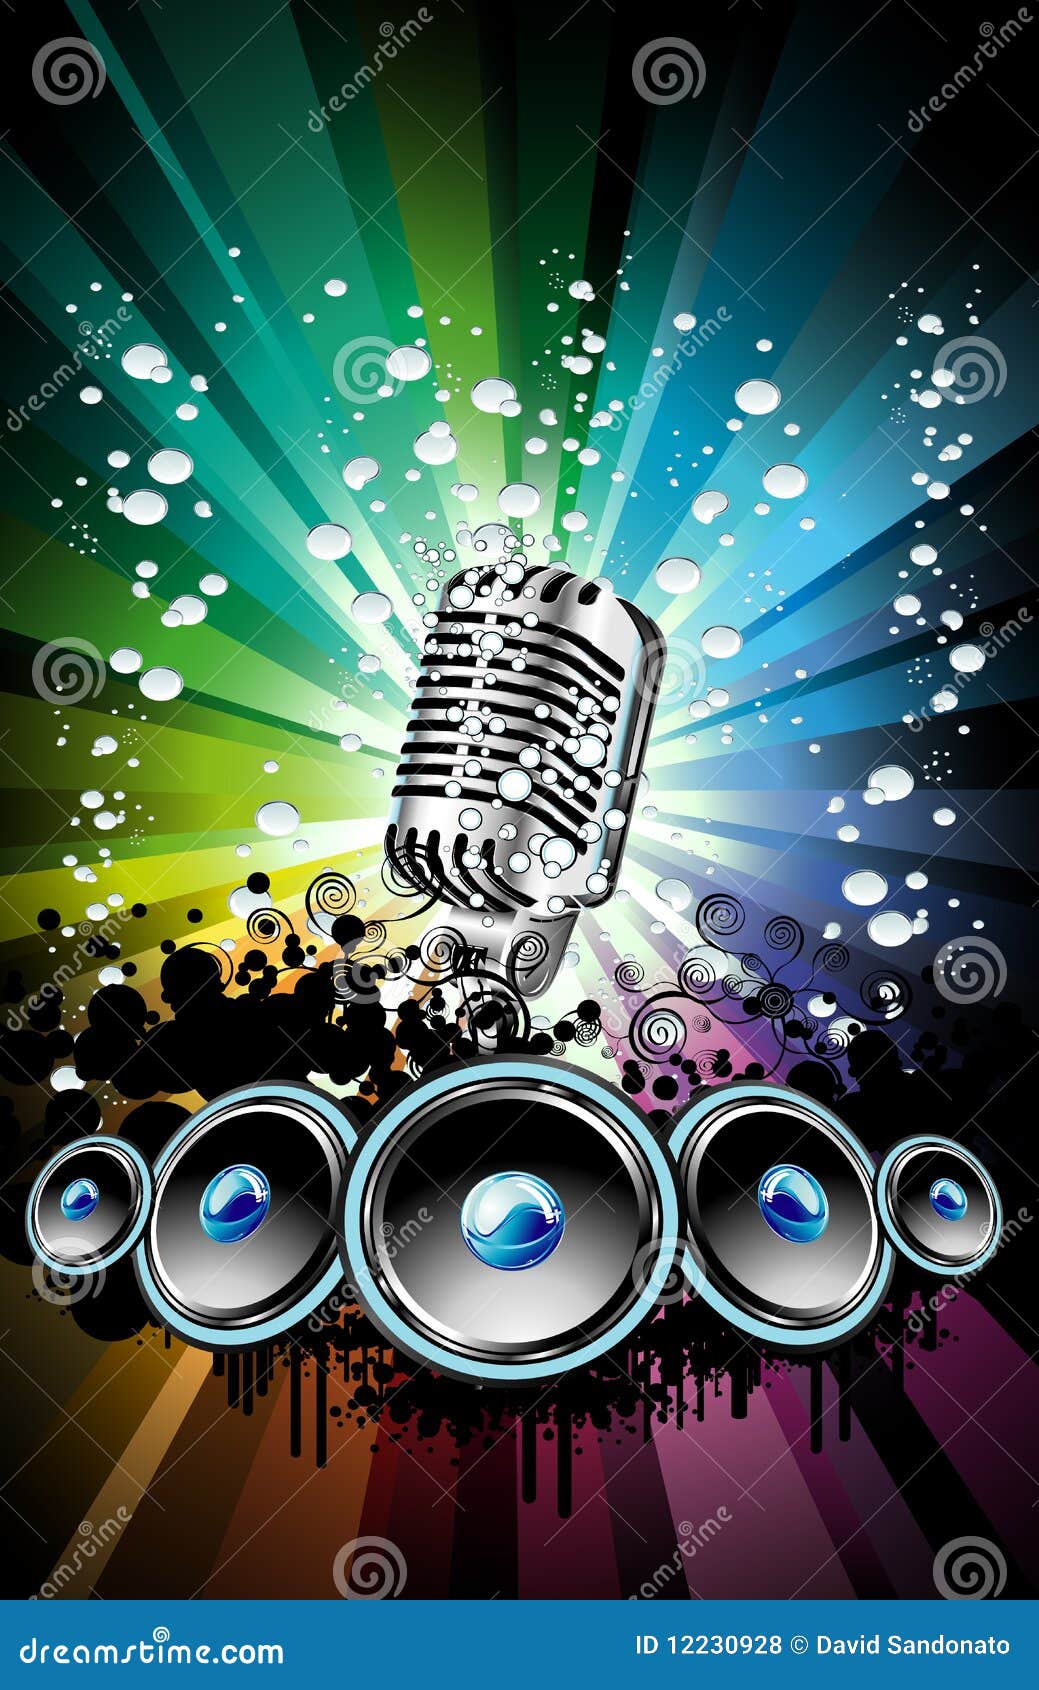 Background For Disco Event Flyer Stock Illustration - Image: 12230928